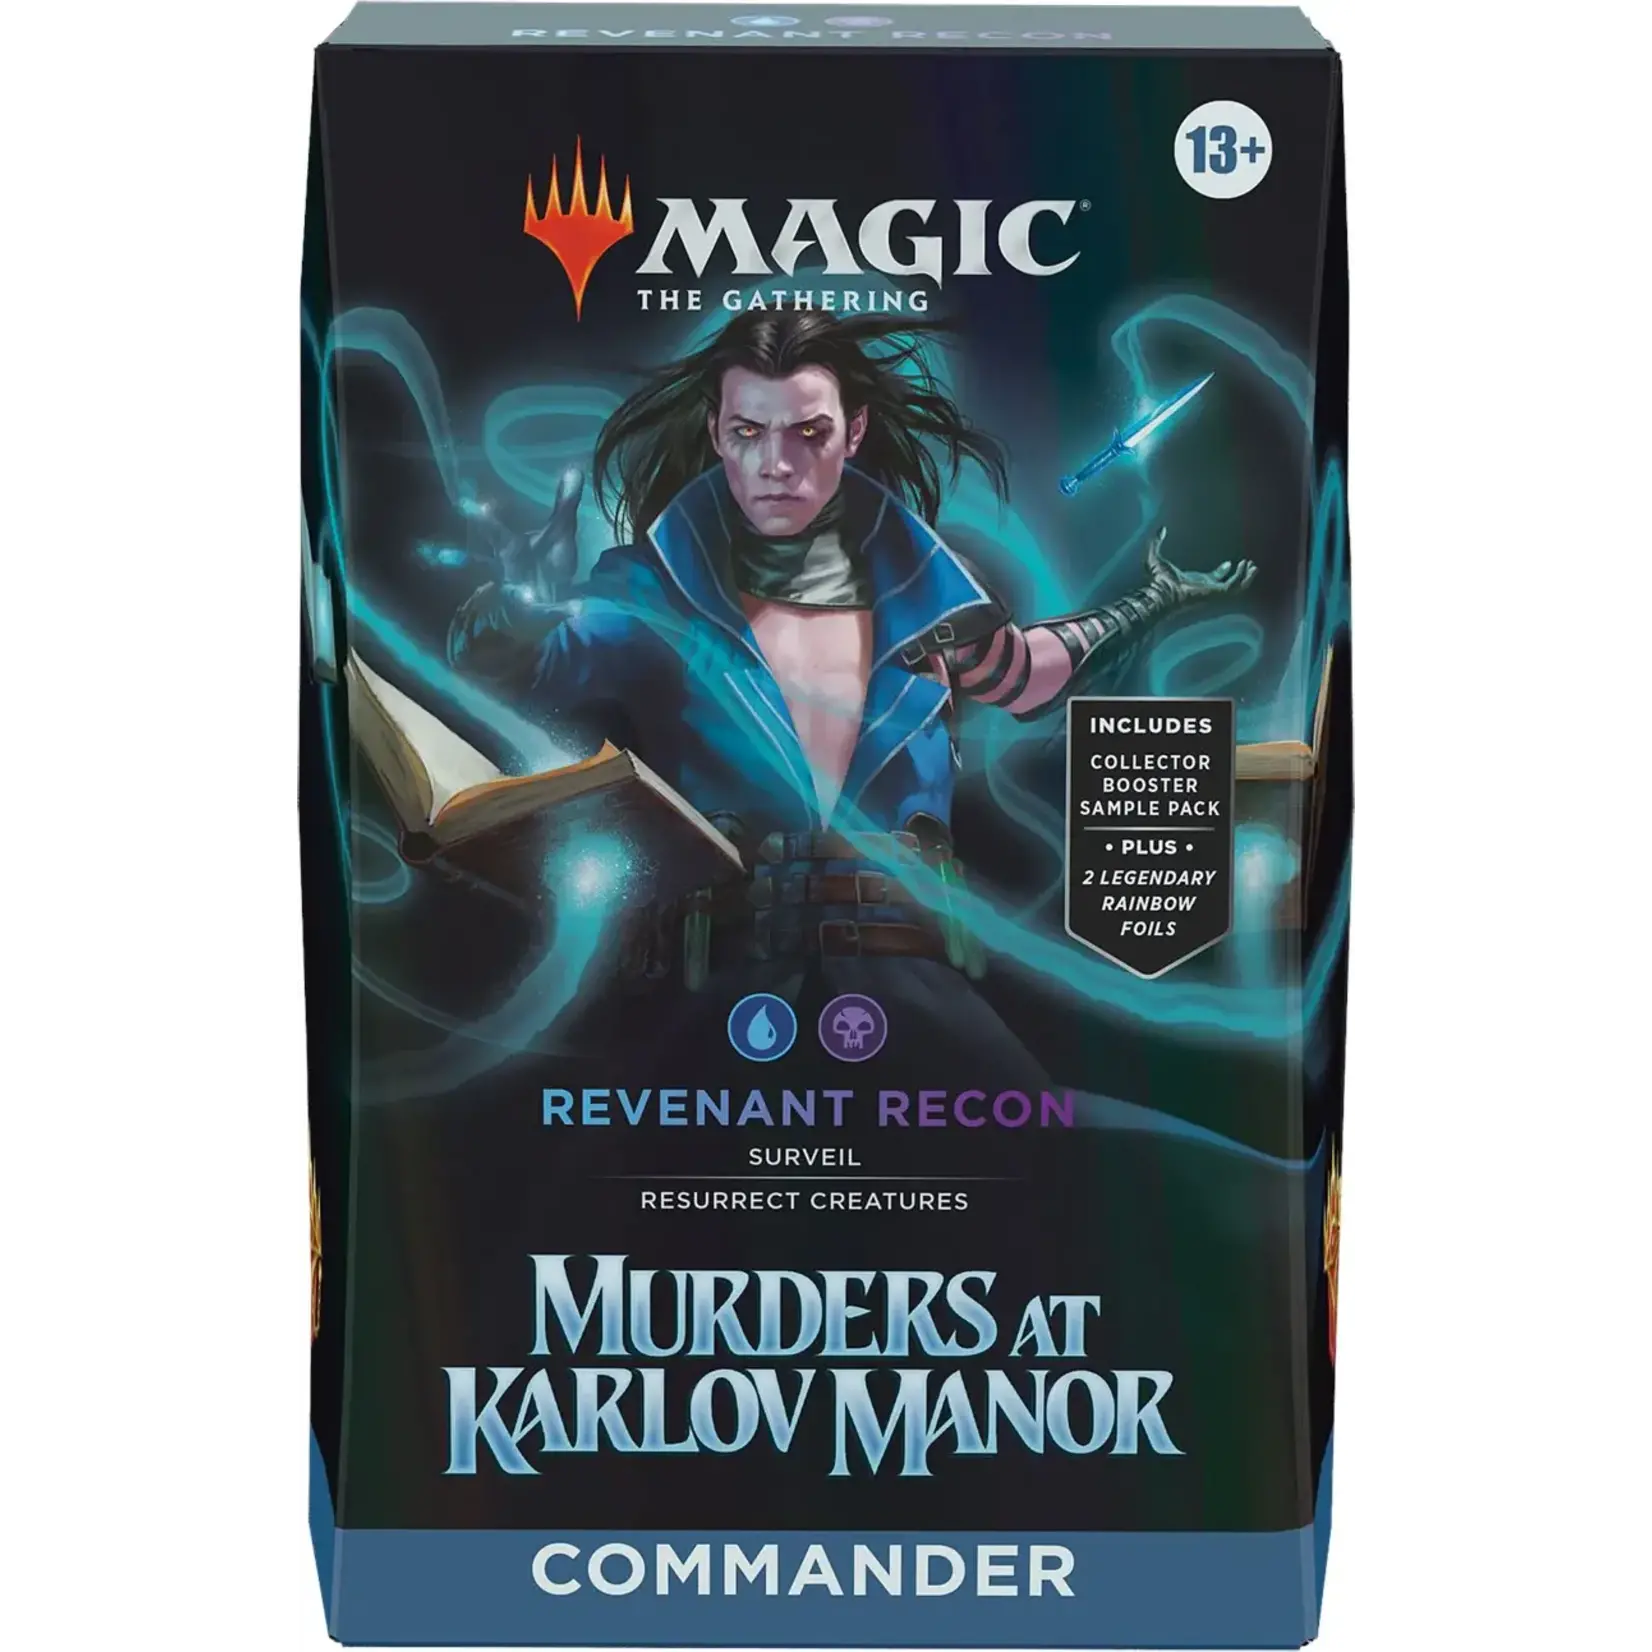 Magic MTG Murders at Karlov Manor Revenant Recon Commander deck